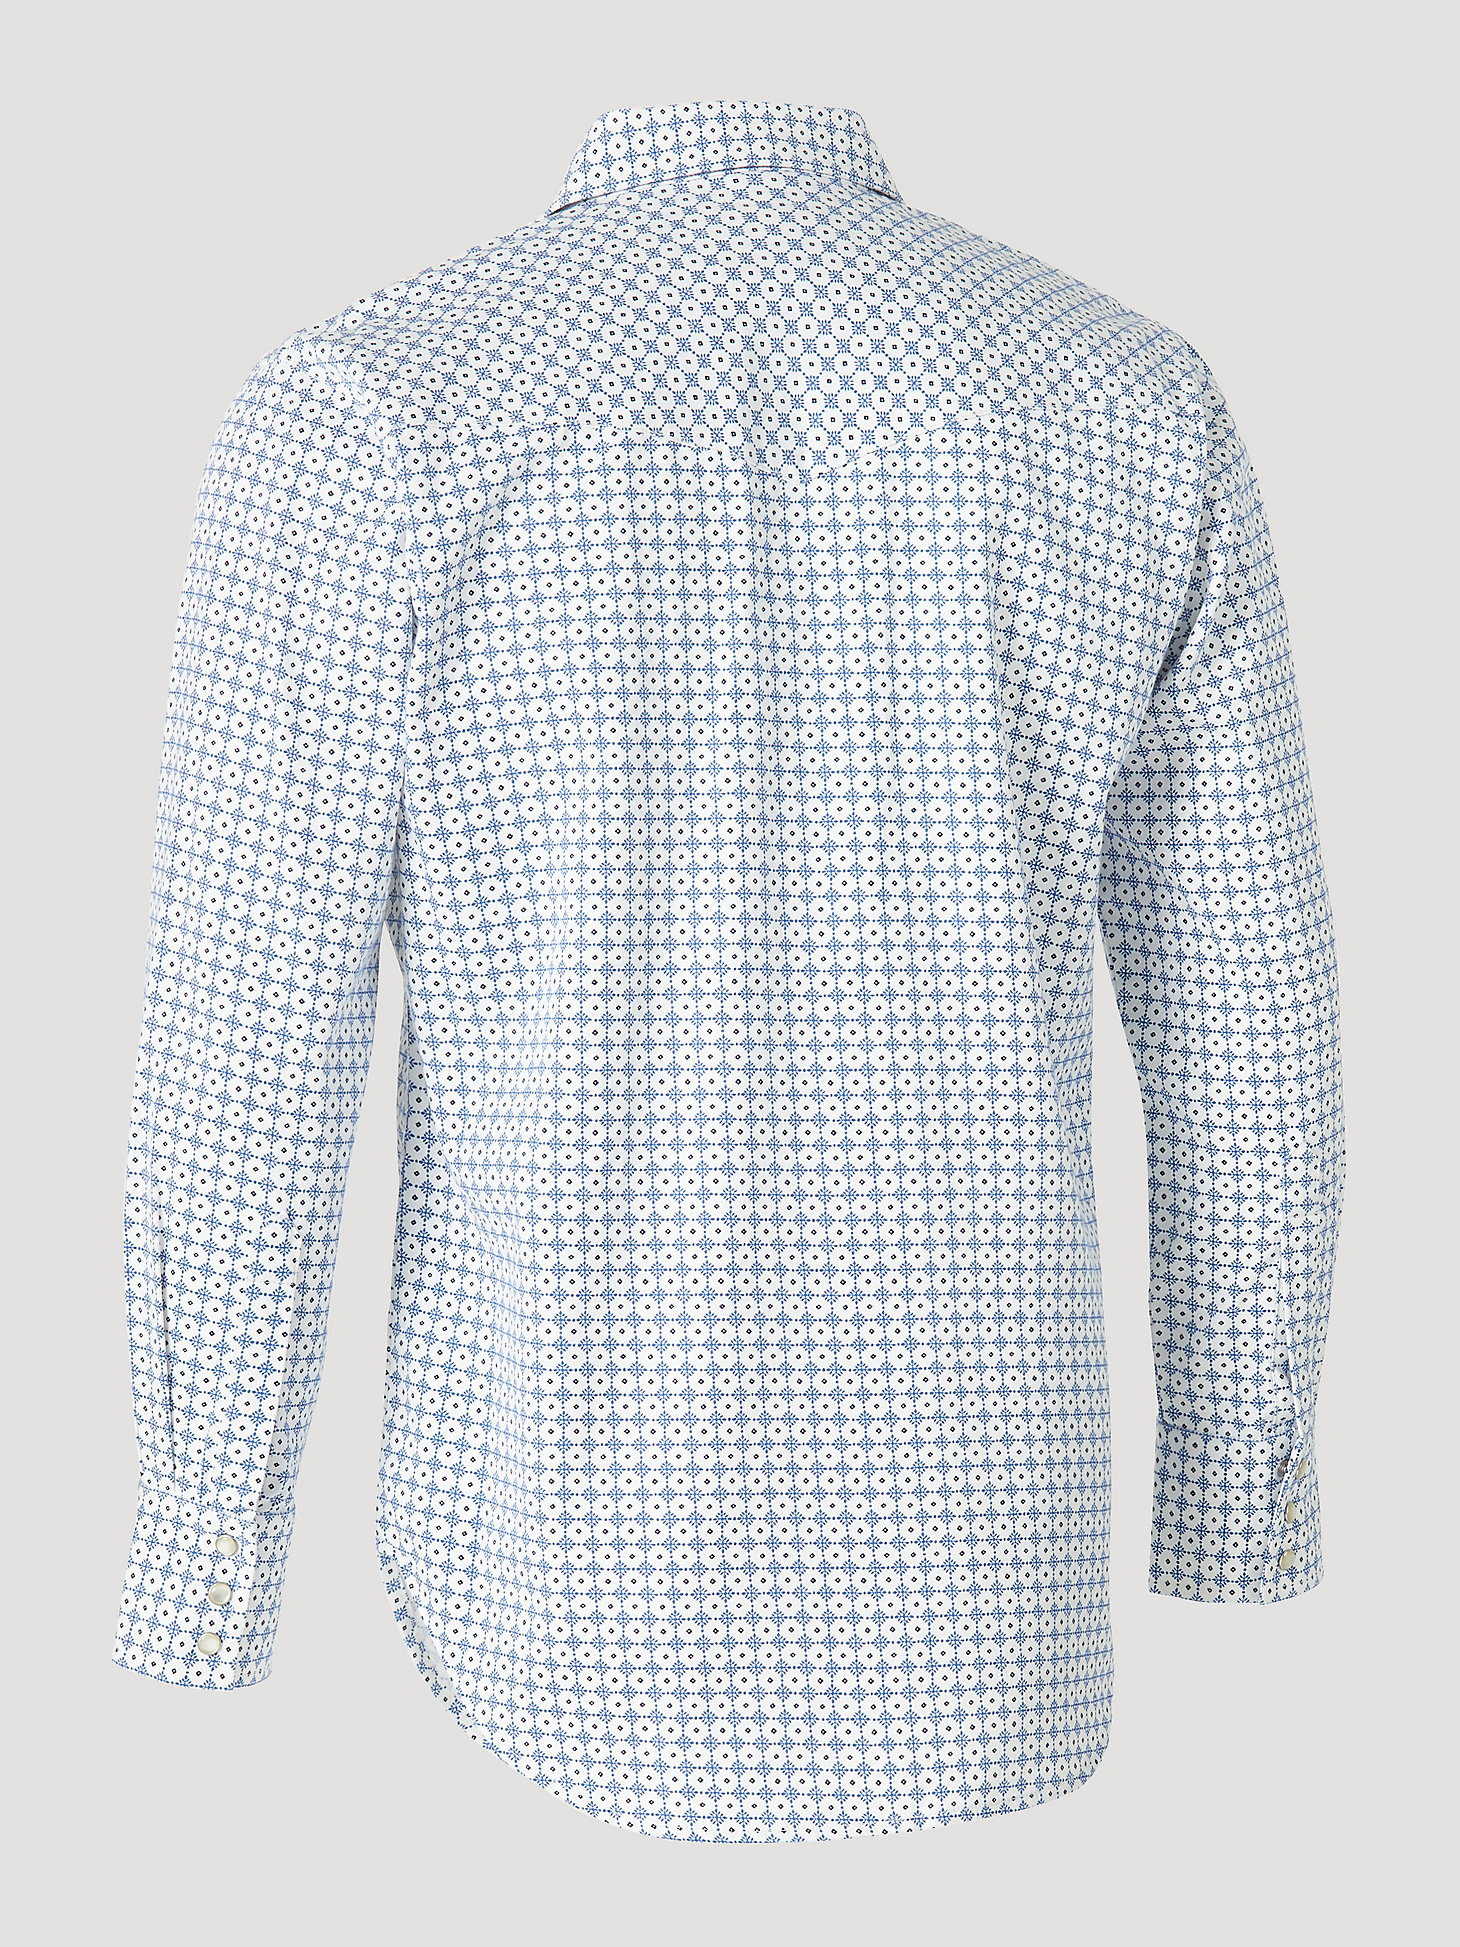 Men's Wrangler® FR Flame Resistant Long Sleeve Western Snap Print Shirt in White/Blue alternative view 1